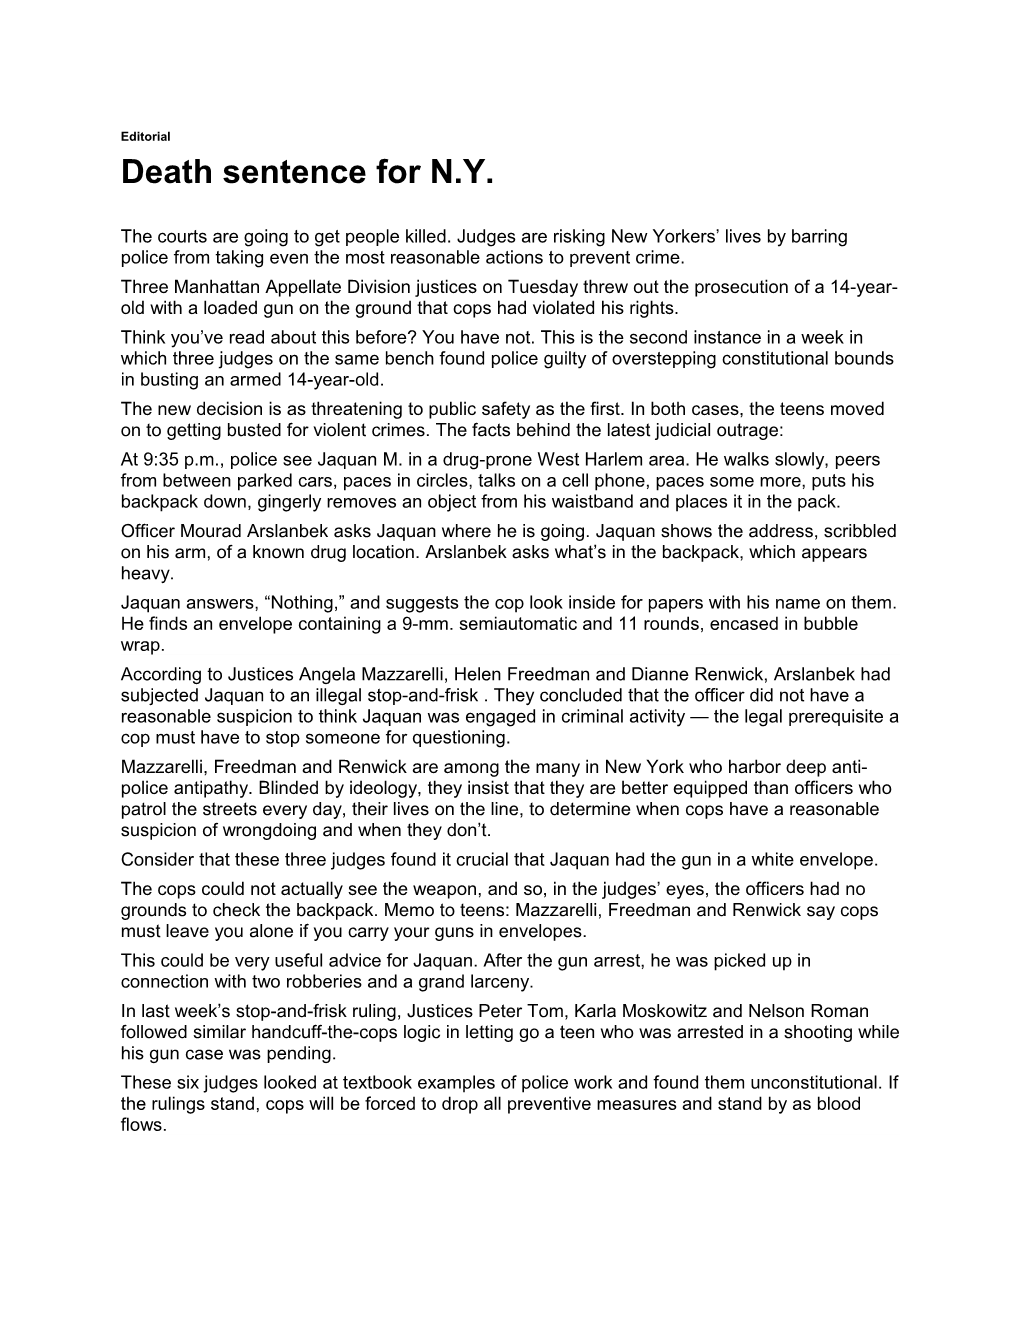 Death Sentence for N.Y